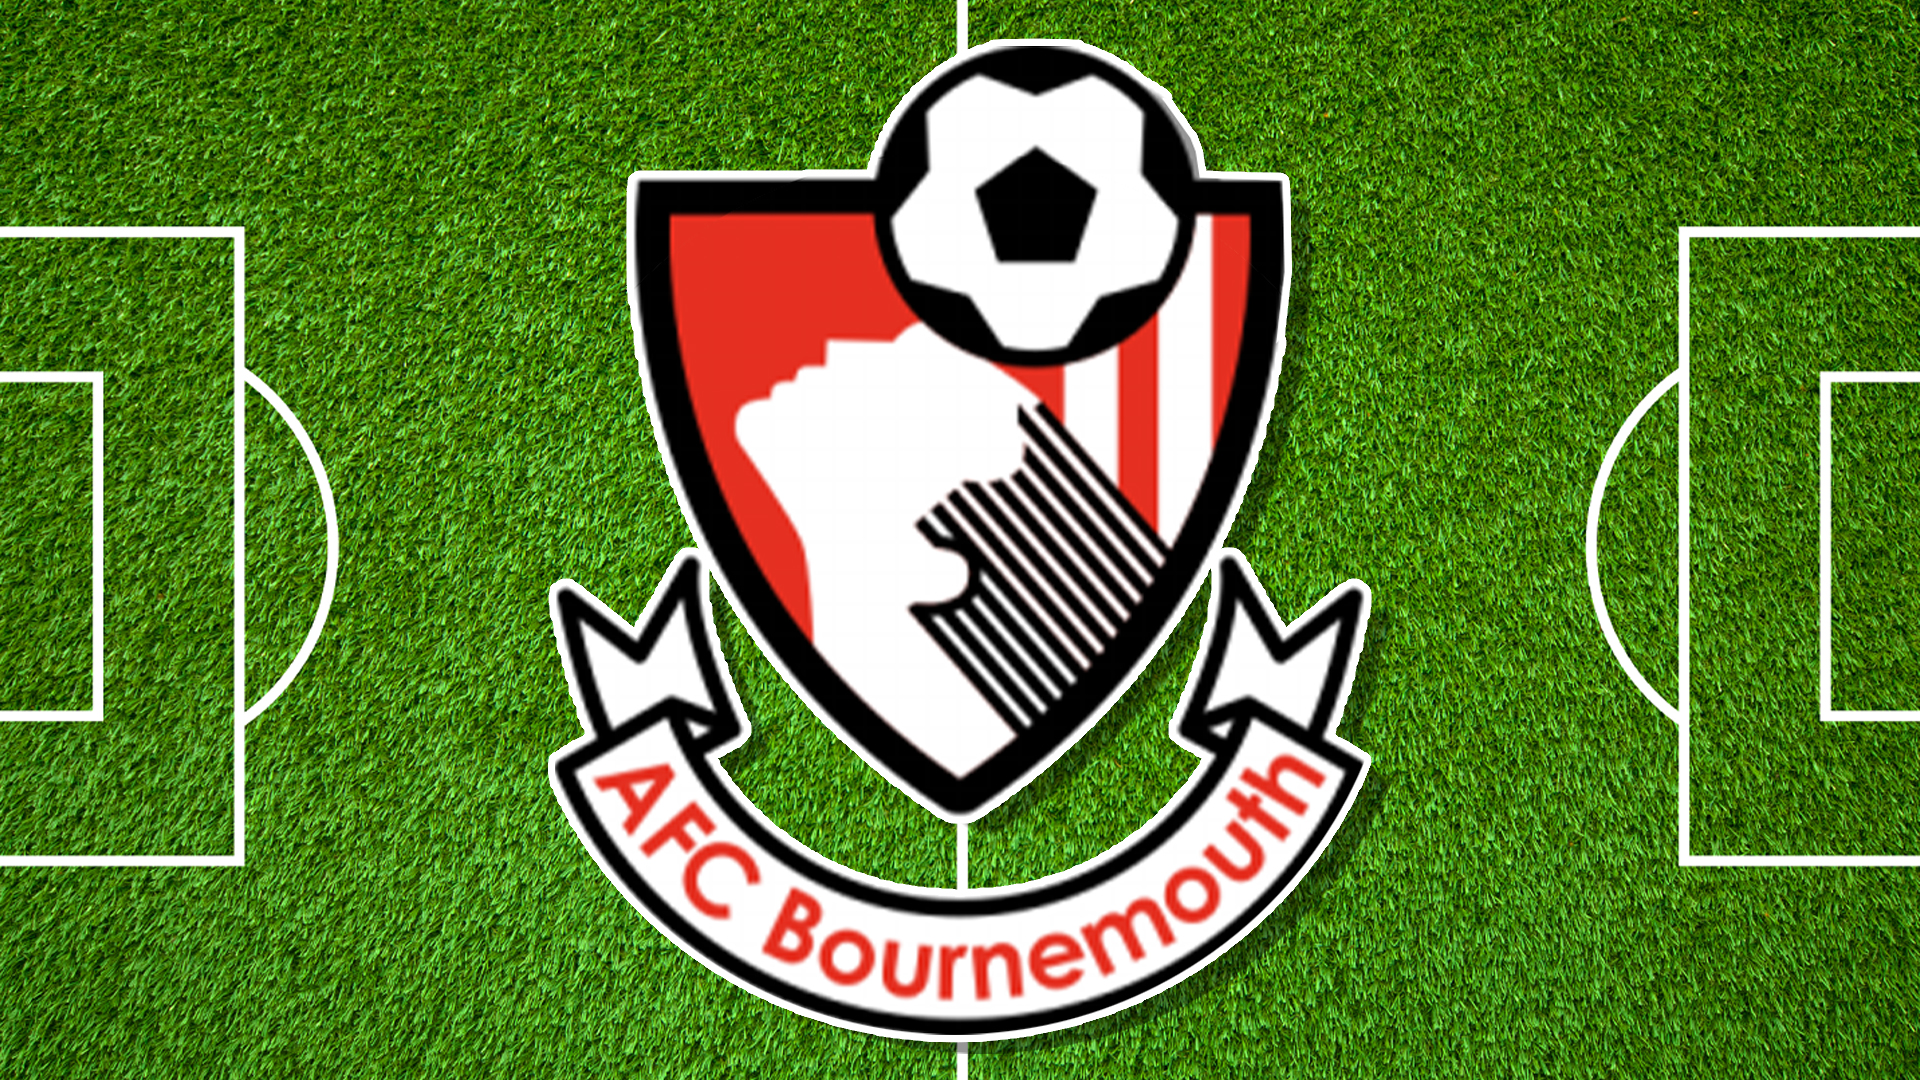 AFC Bournemouth badge